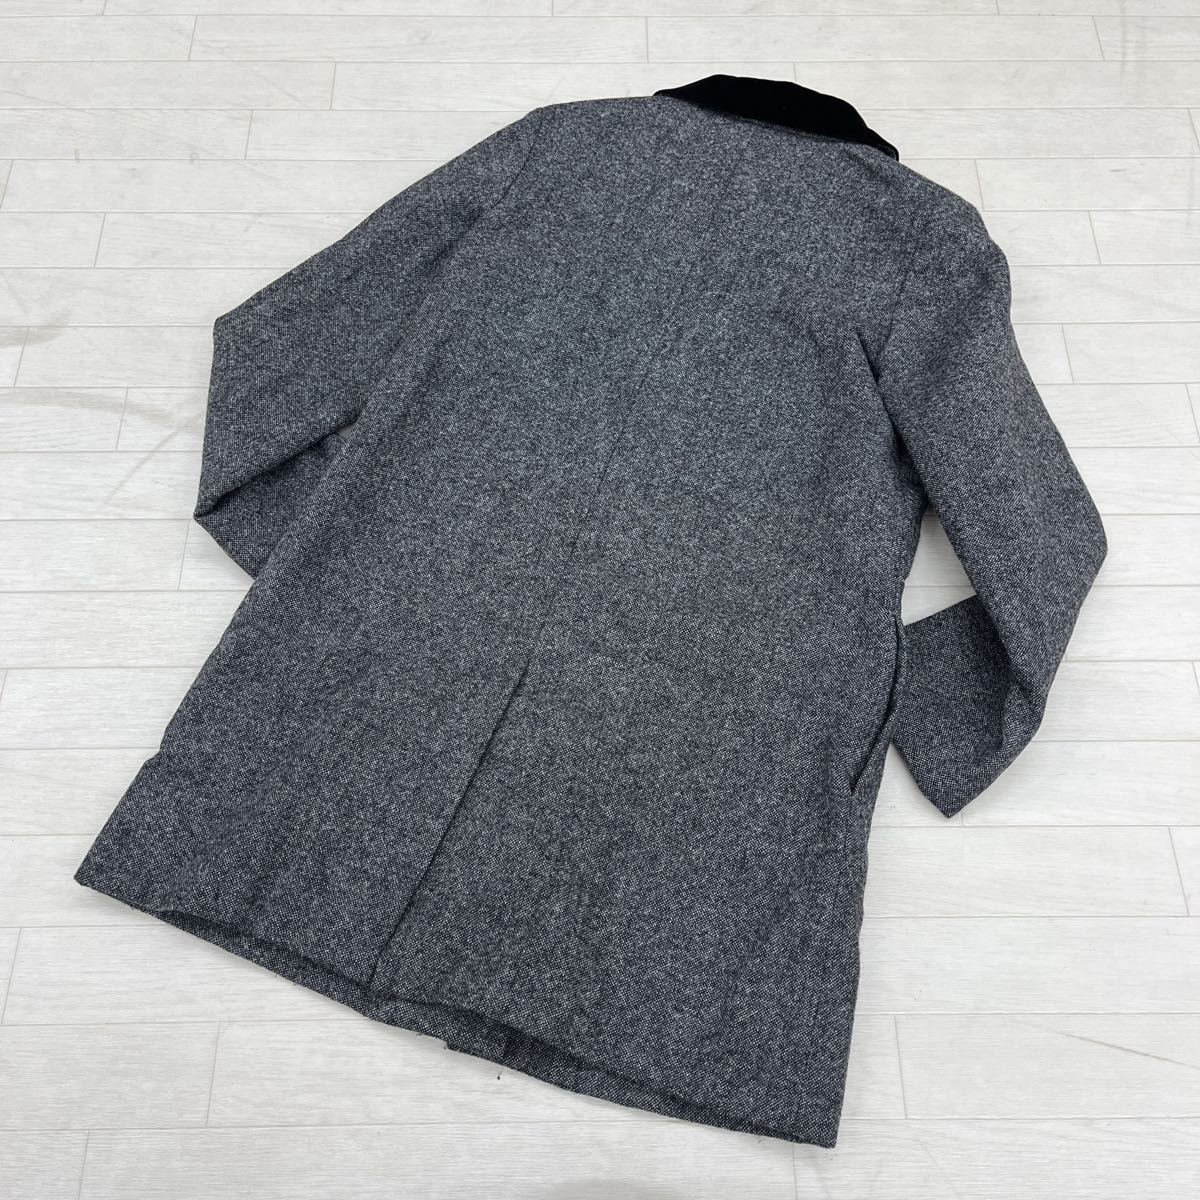 1312* A.P.C A.P.C. tops half coat single long sleeve wool 100 casual gray lady's 38